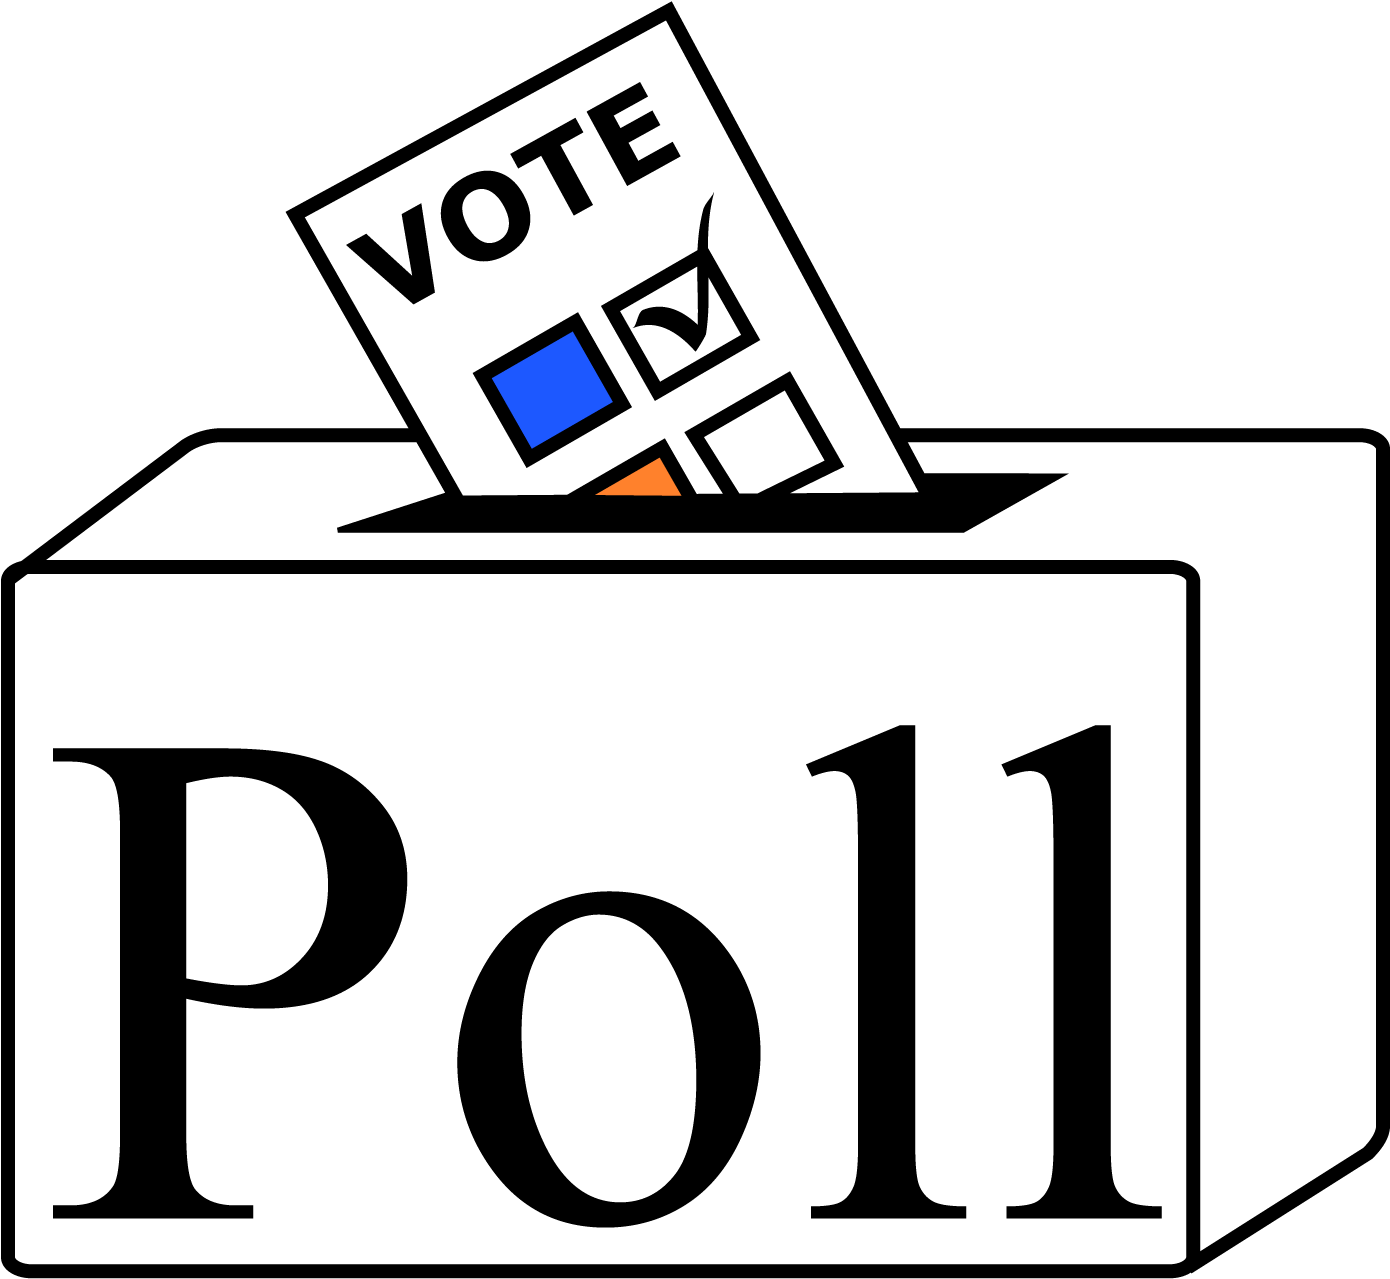 Ballot Box Voting Illustration.png PNG